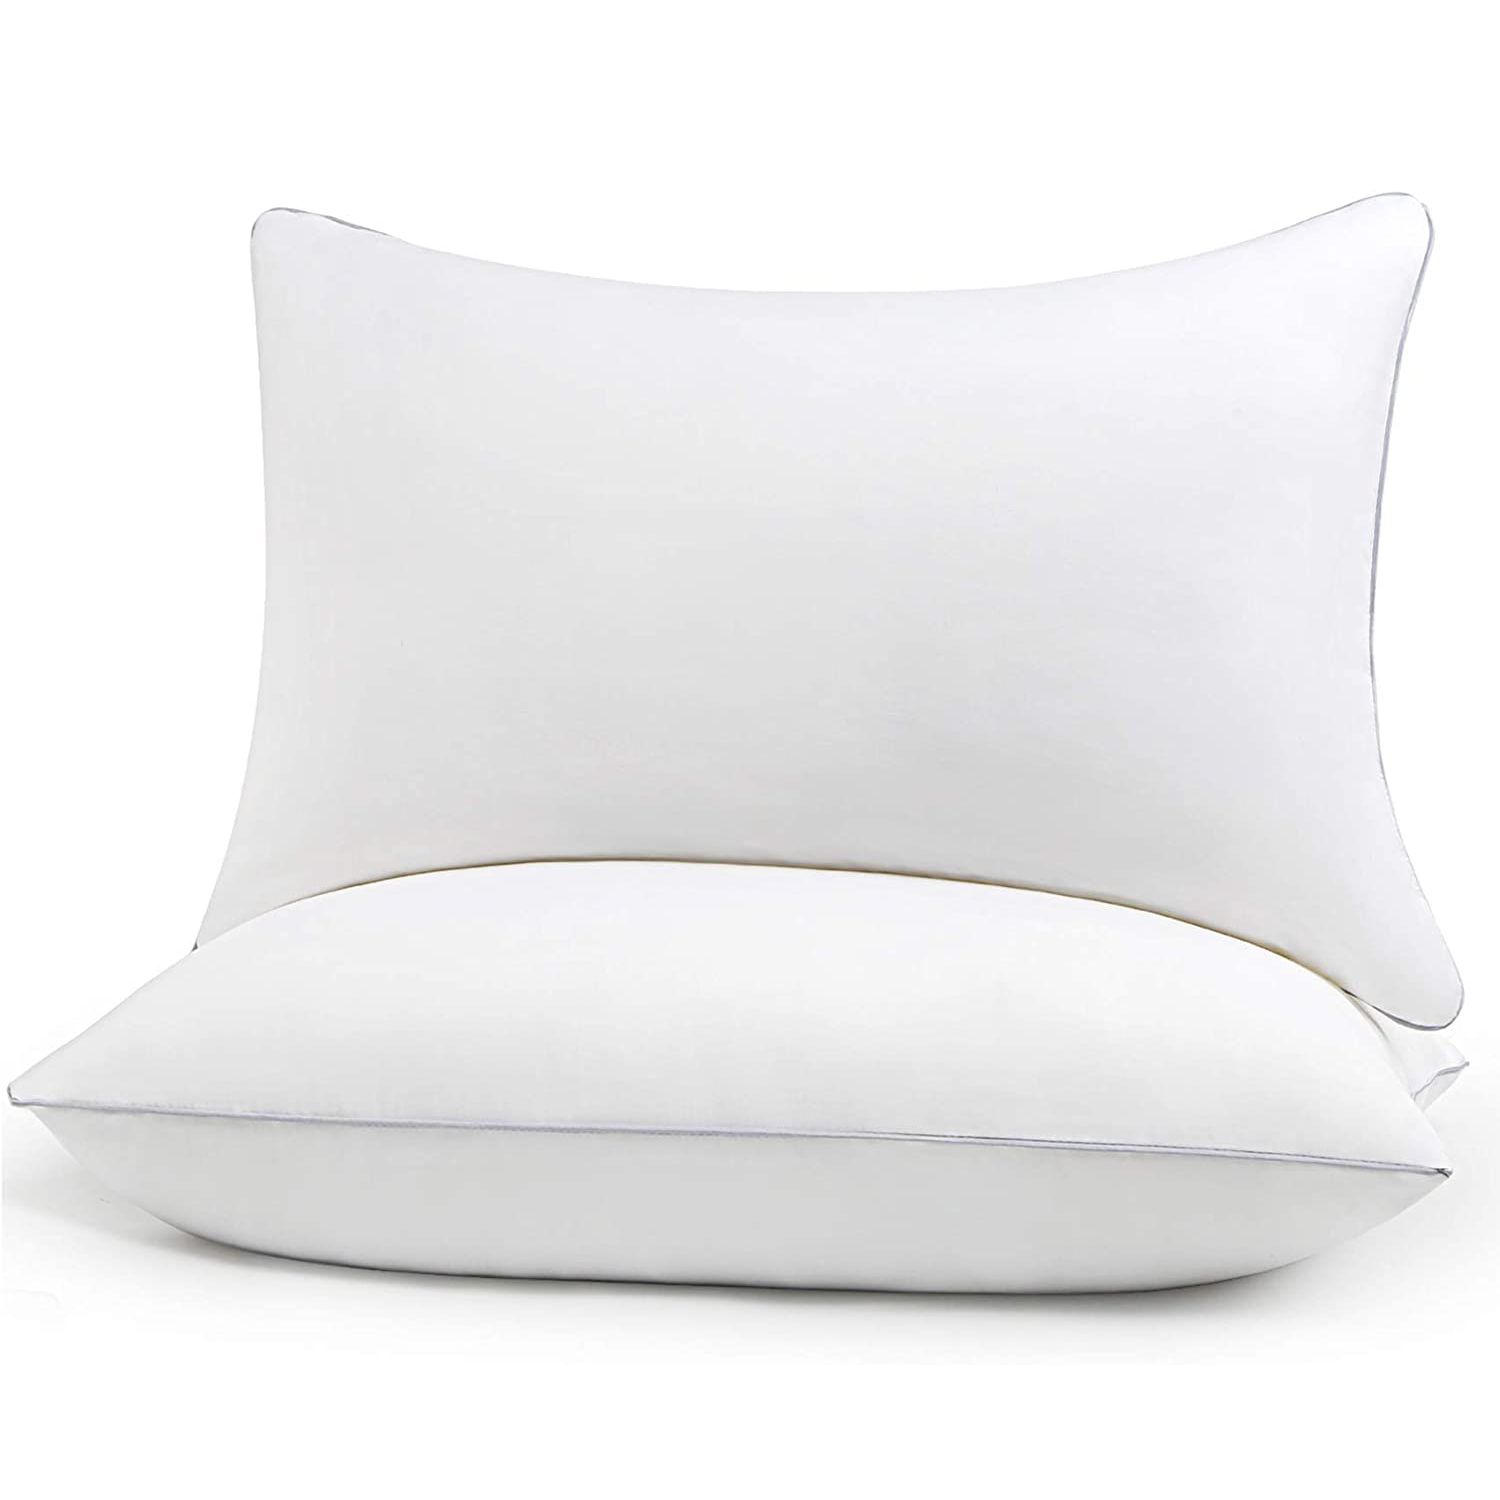 Himoon Queen Size Pillow Set